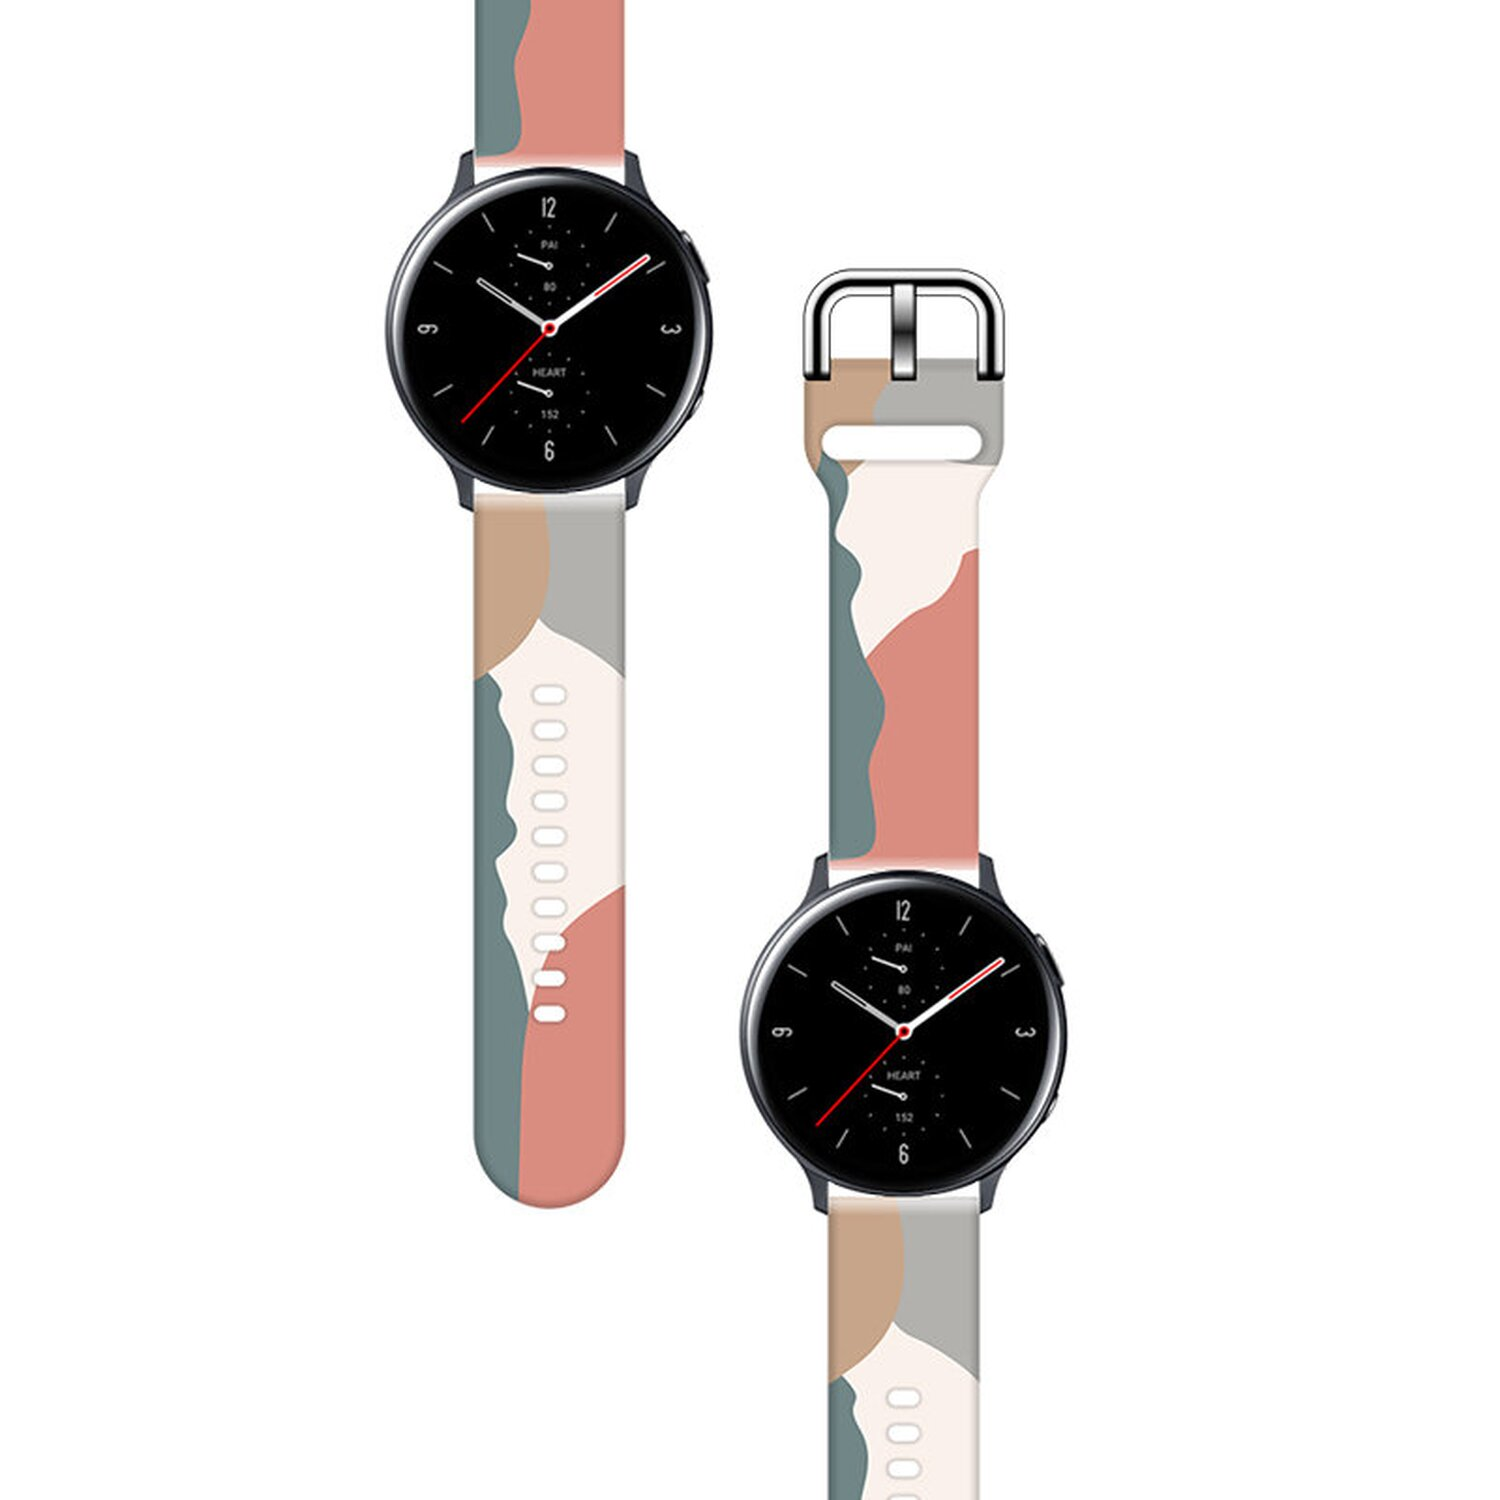 Motiv Smartband, Moro Camo, Galaxy Watch Strap Samsung, 42mm, COFI 15